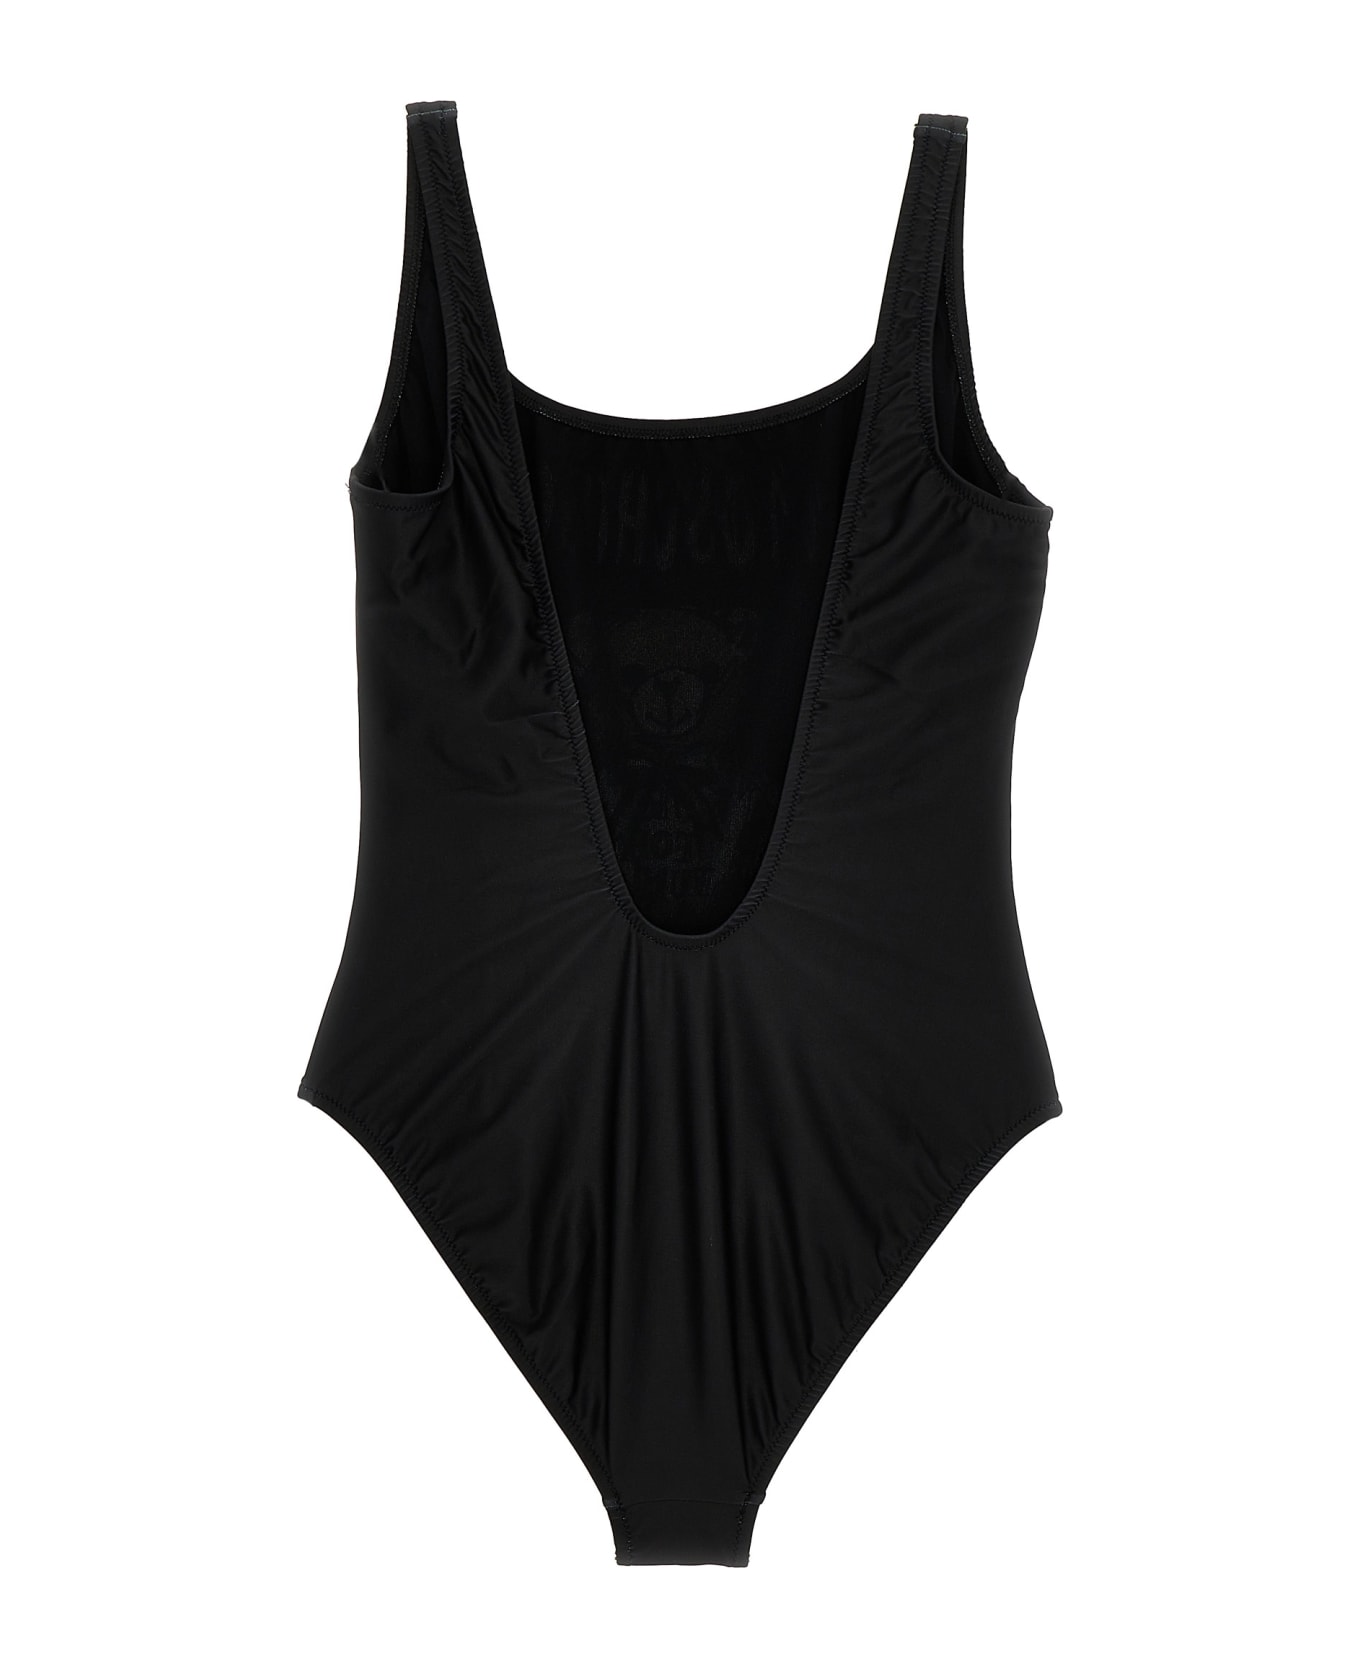 Moschino 'teddy Bear' One-piece Swimsuit - Black  